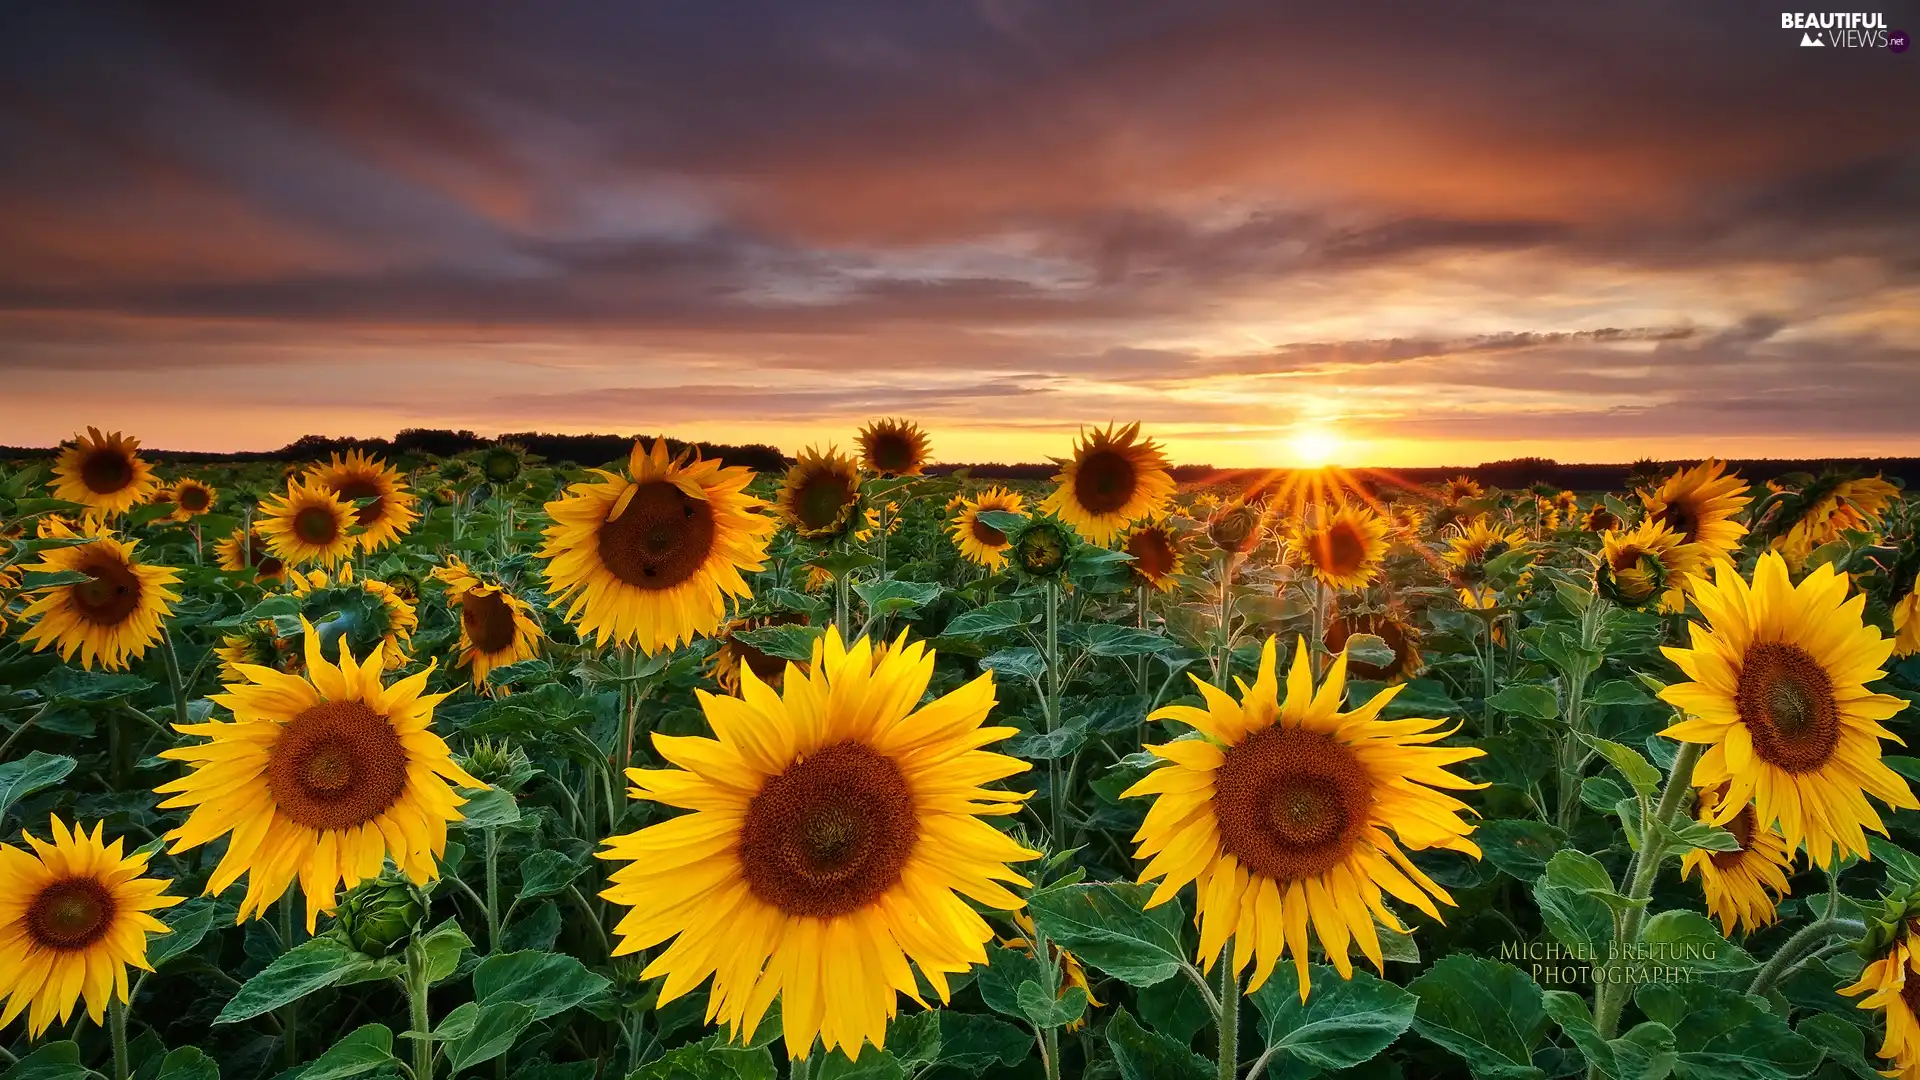 Great Sunsets, Nice sunflowers, plantation